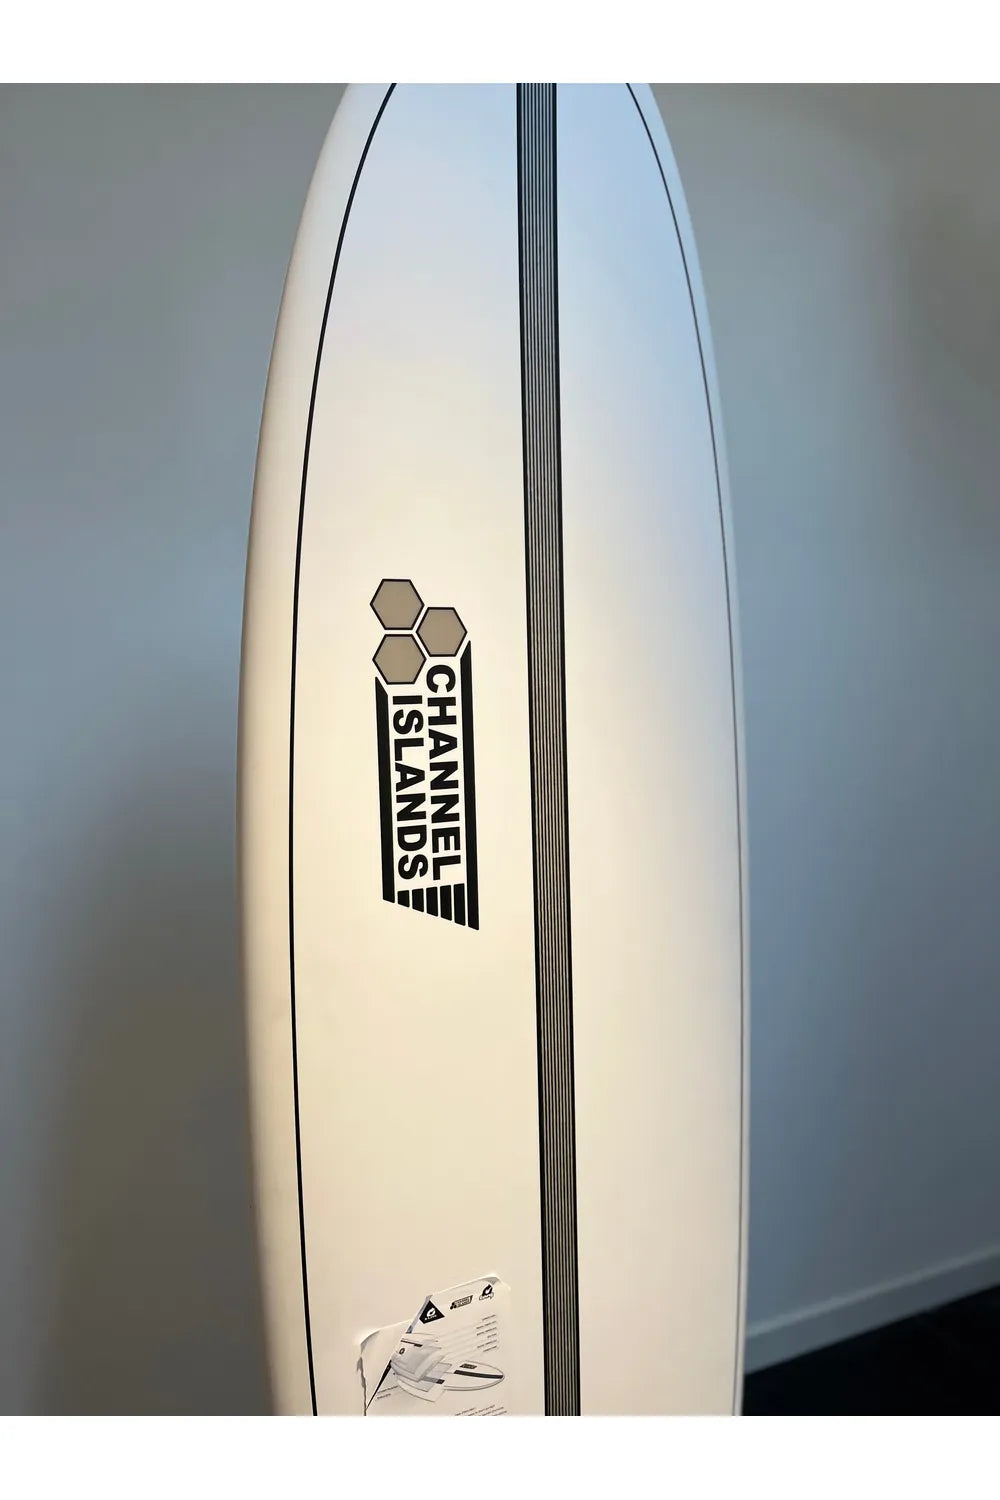 Torq Chancho X-Lite Channel Islands White Surfboard